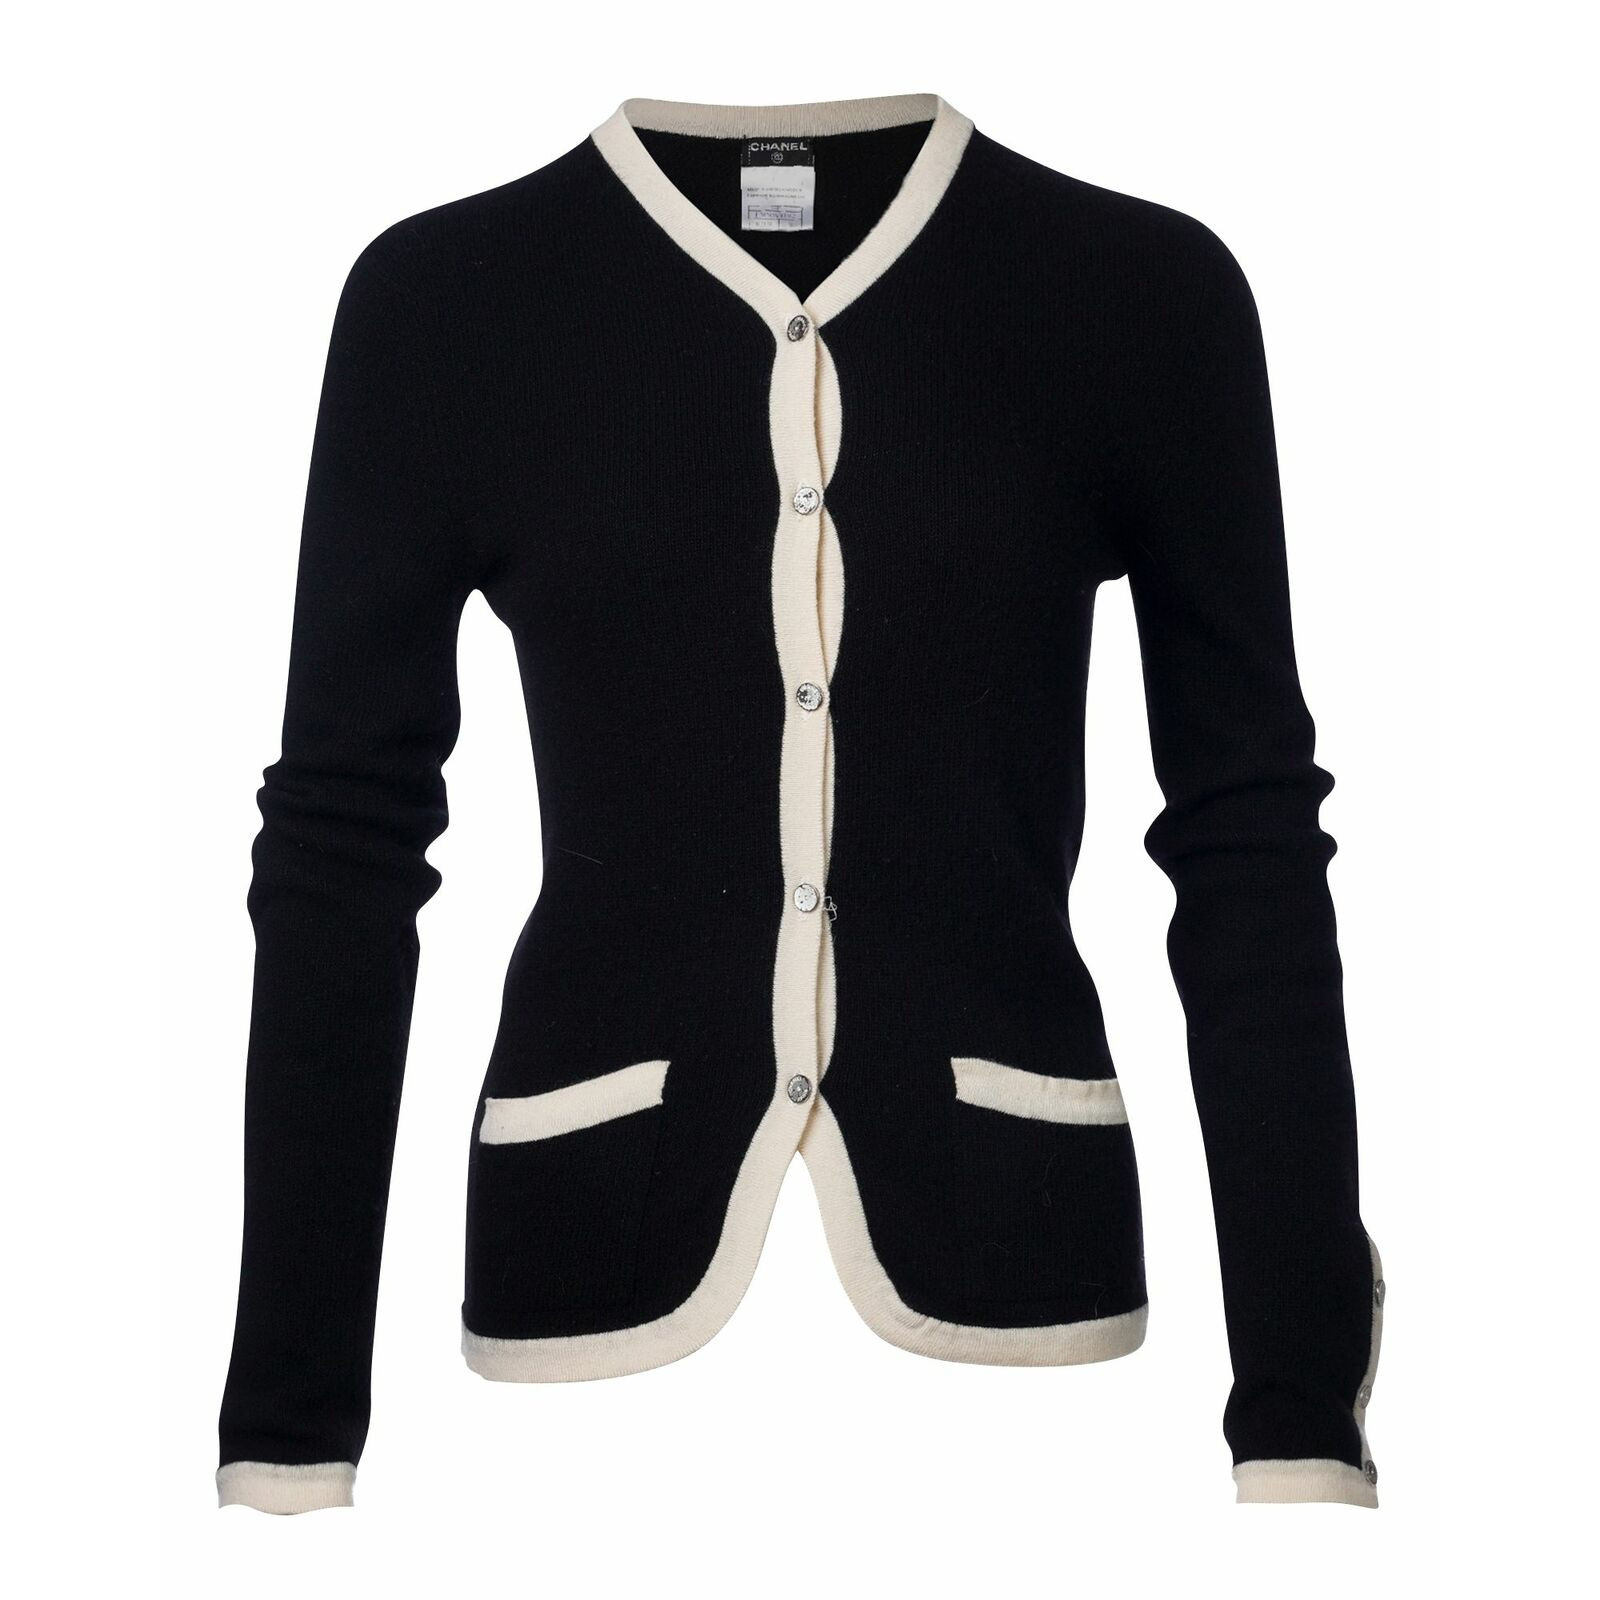 CHANEL Women's Jacke/Mantel aus Baumwolle in Schwarz